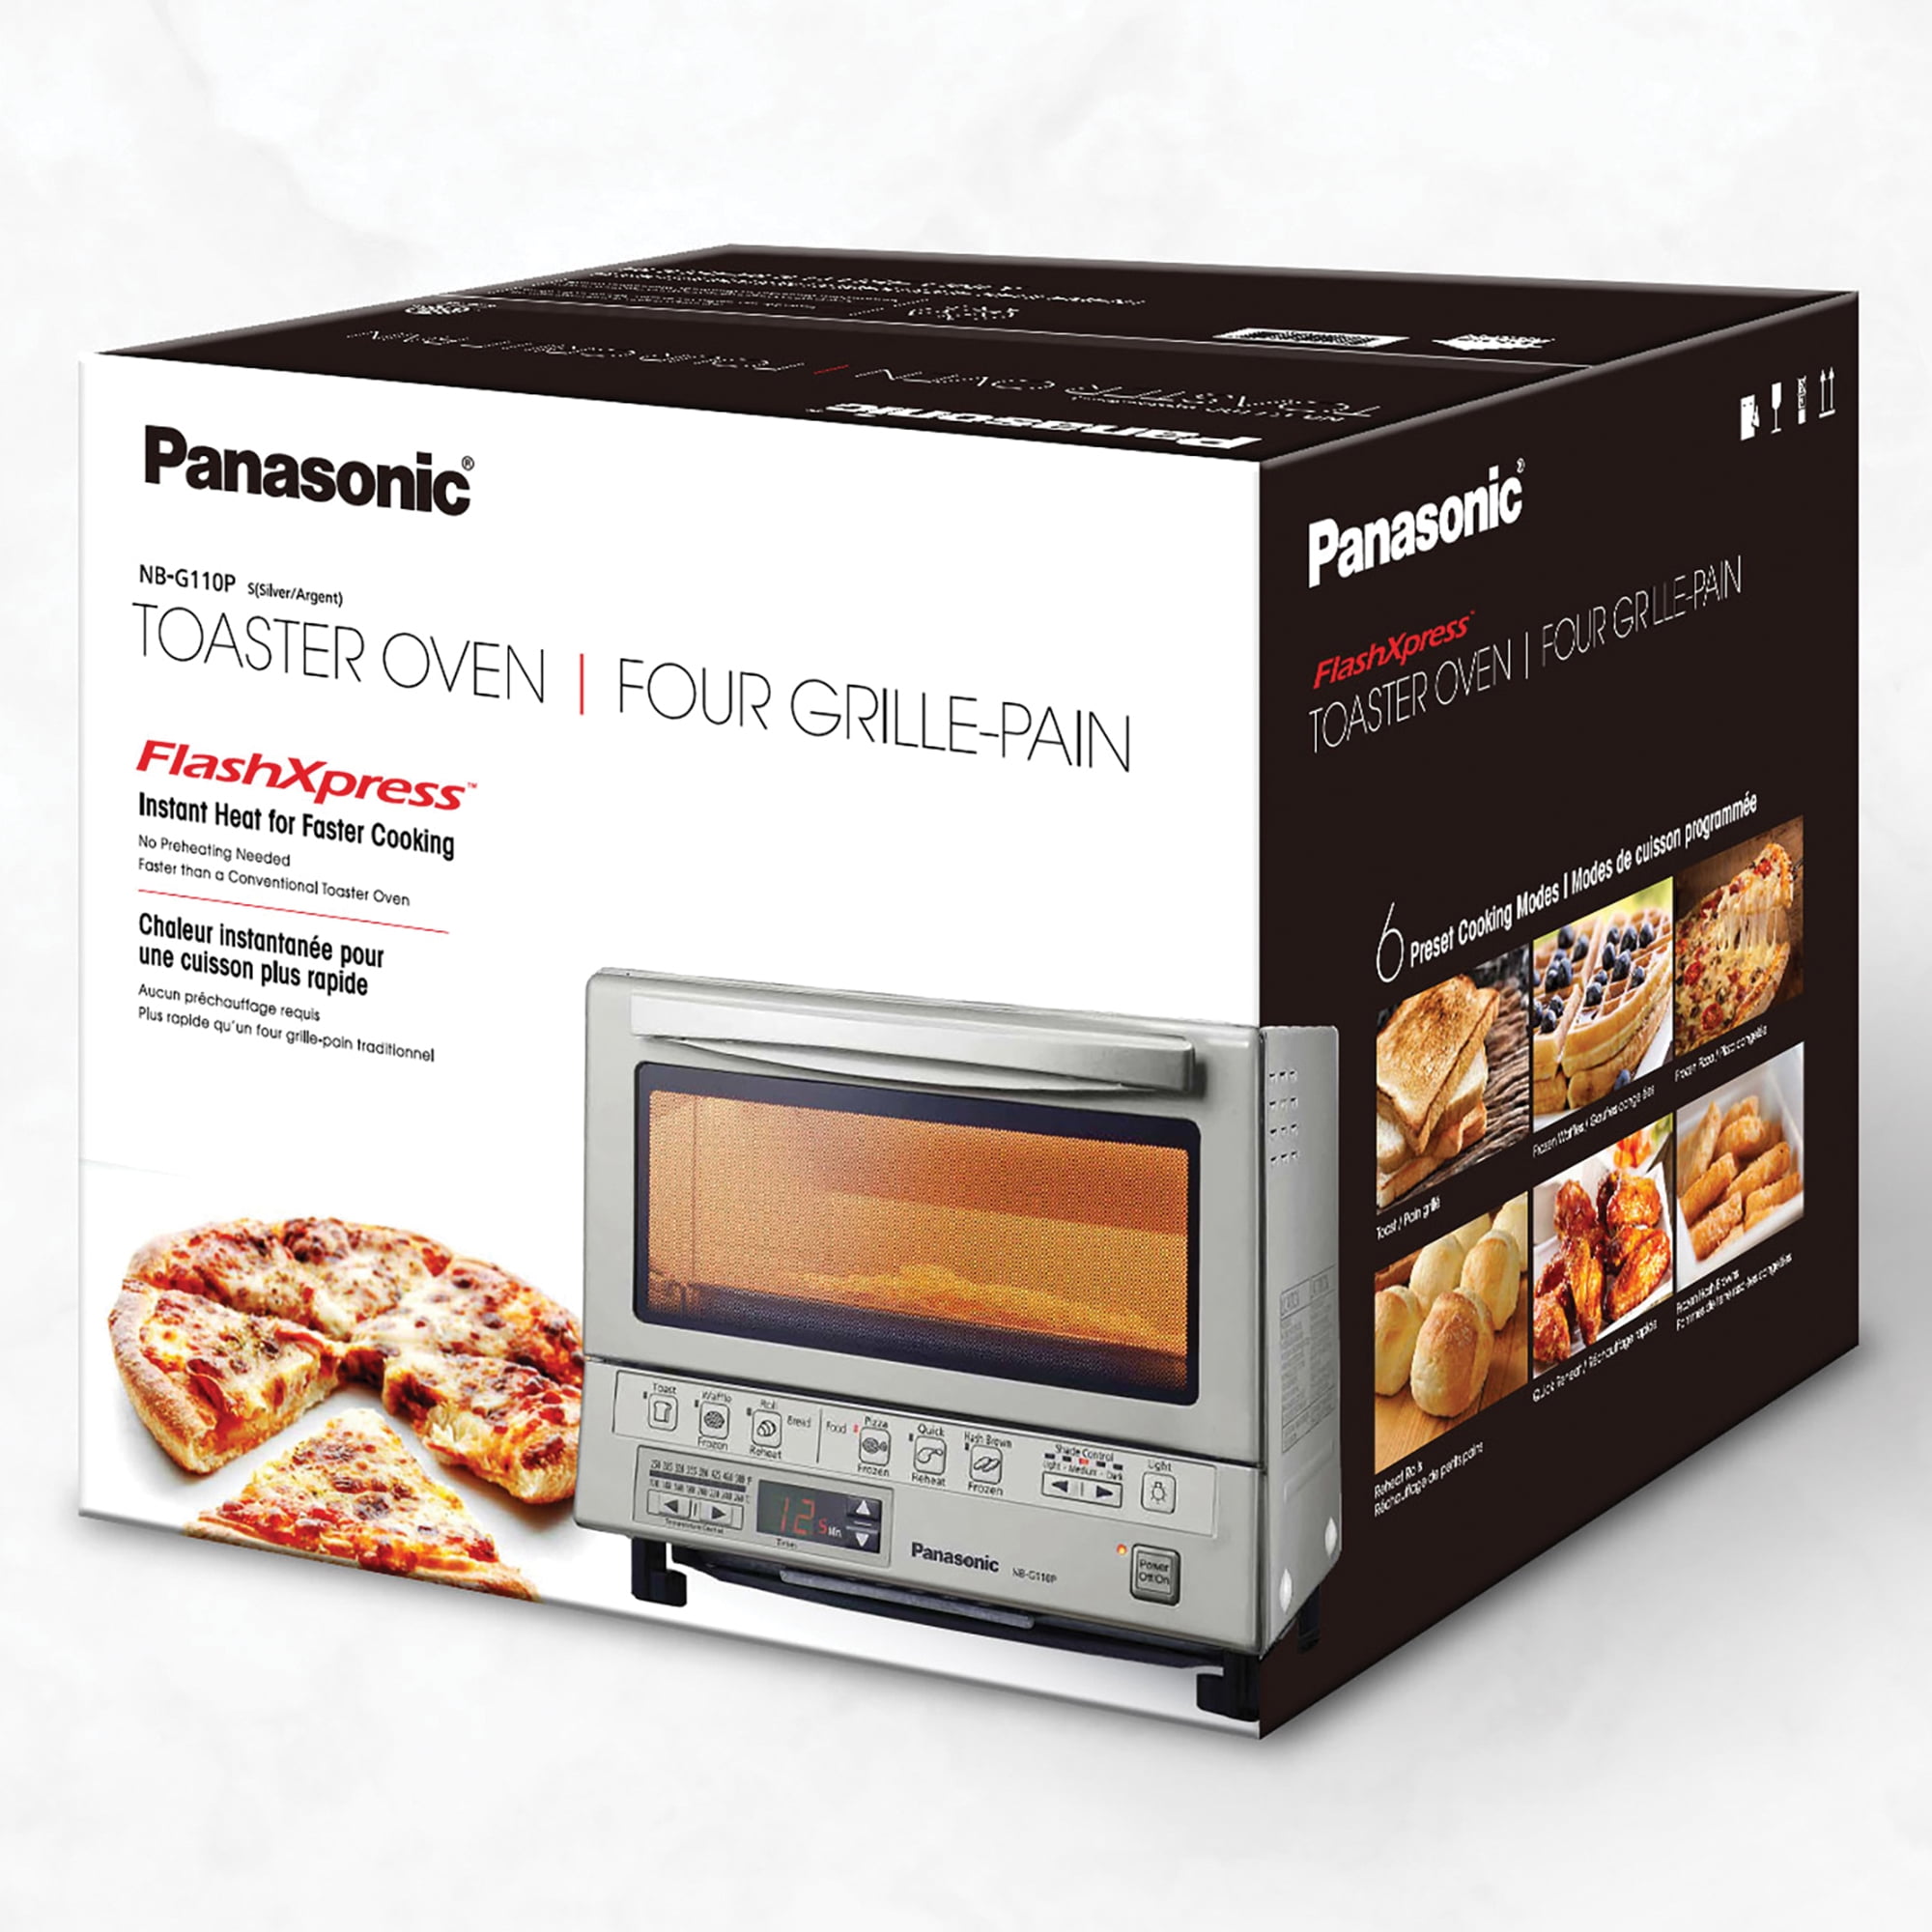 Panasonic Flash Express Toaster Oven - Silver Nb-g110p : Target